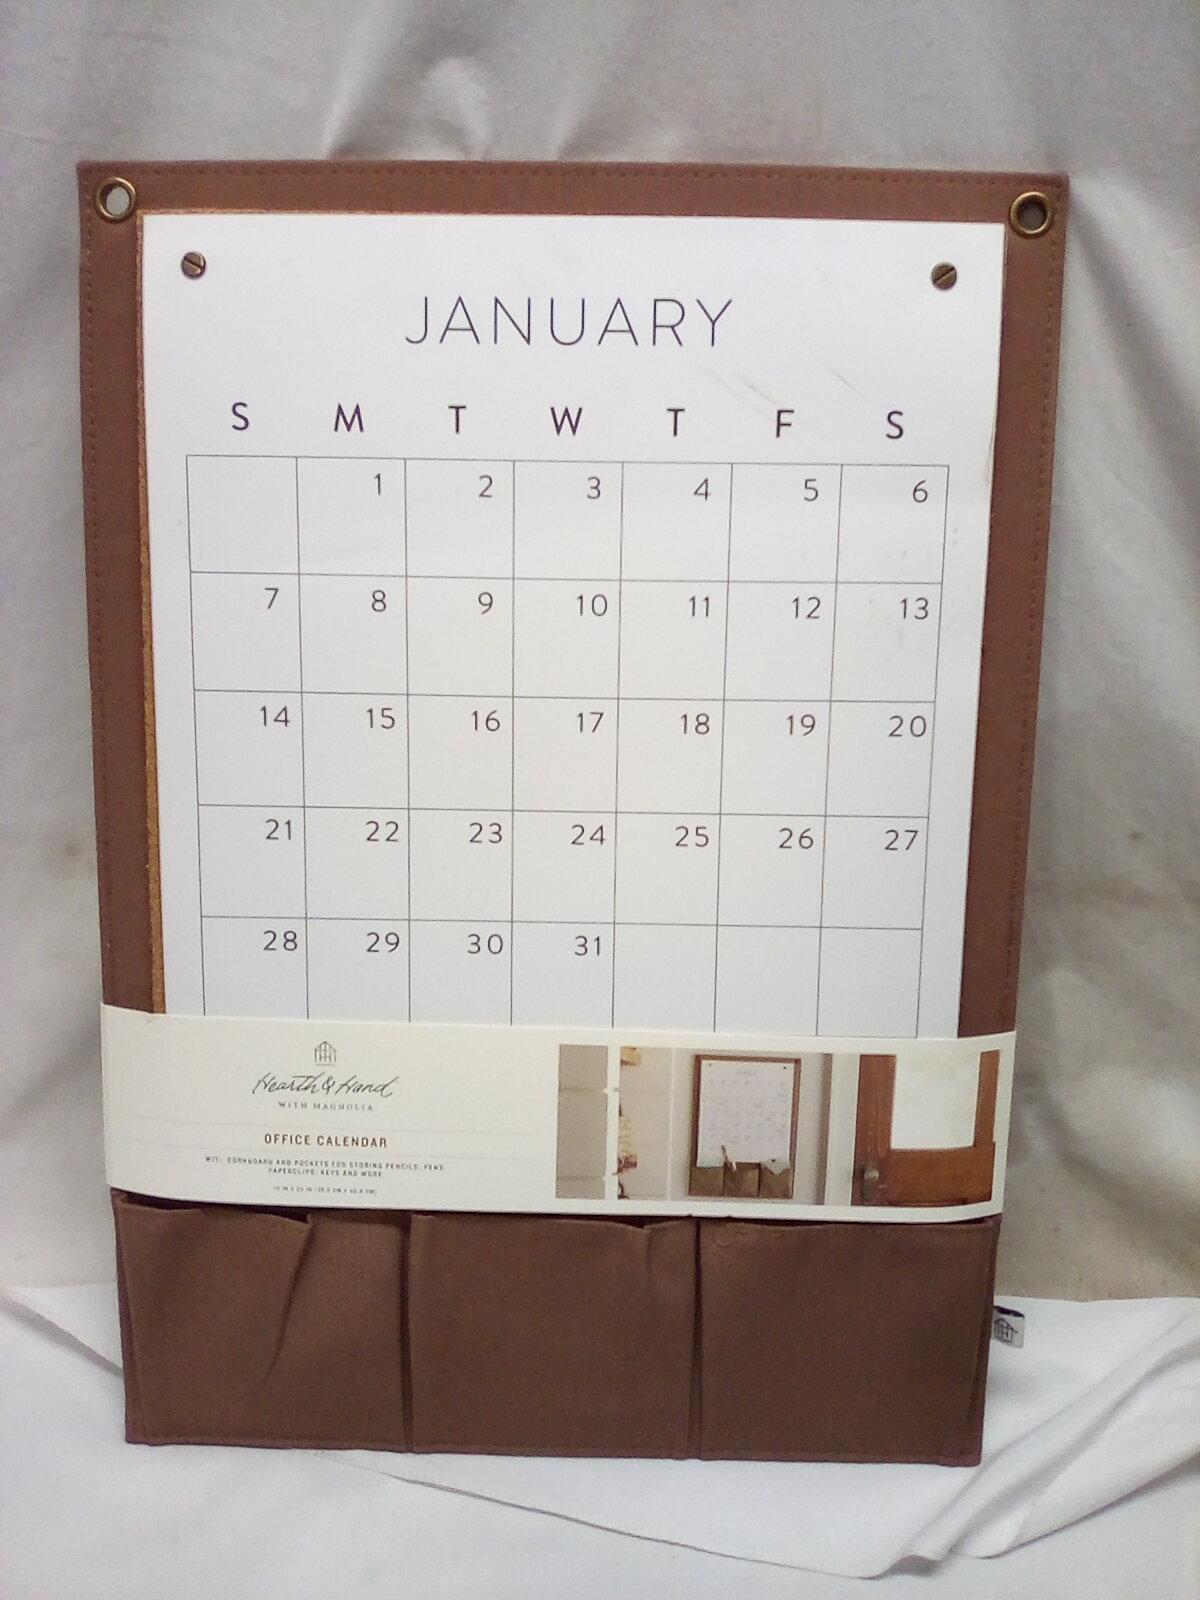 Hearth & Hand Office Calendar